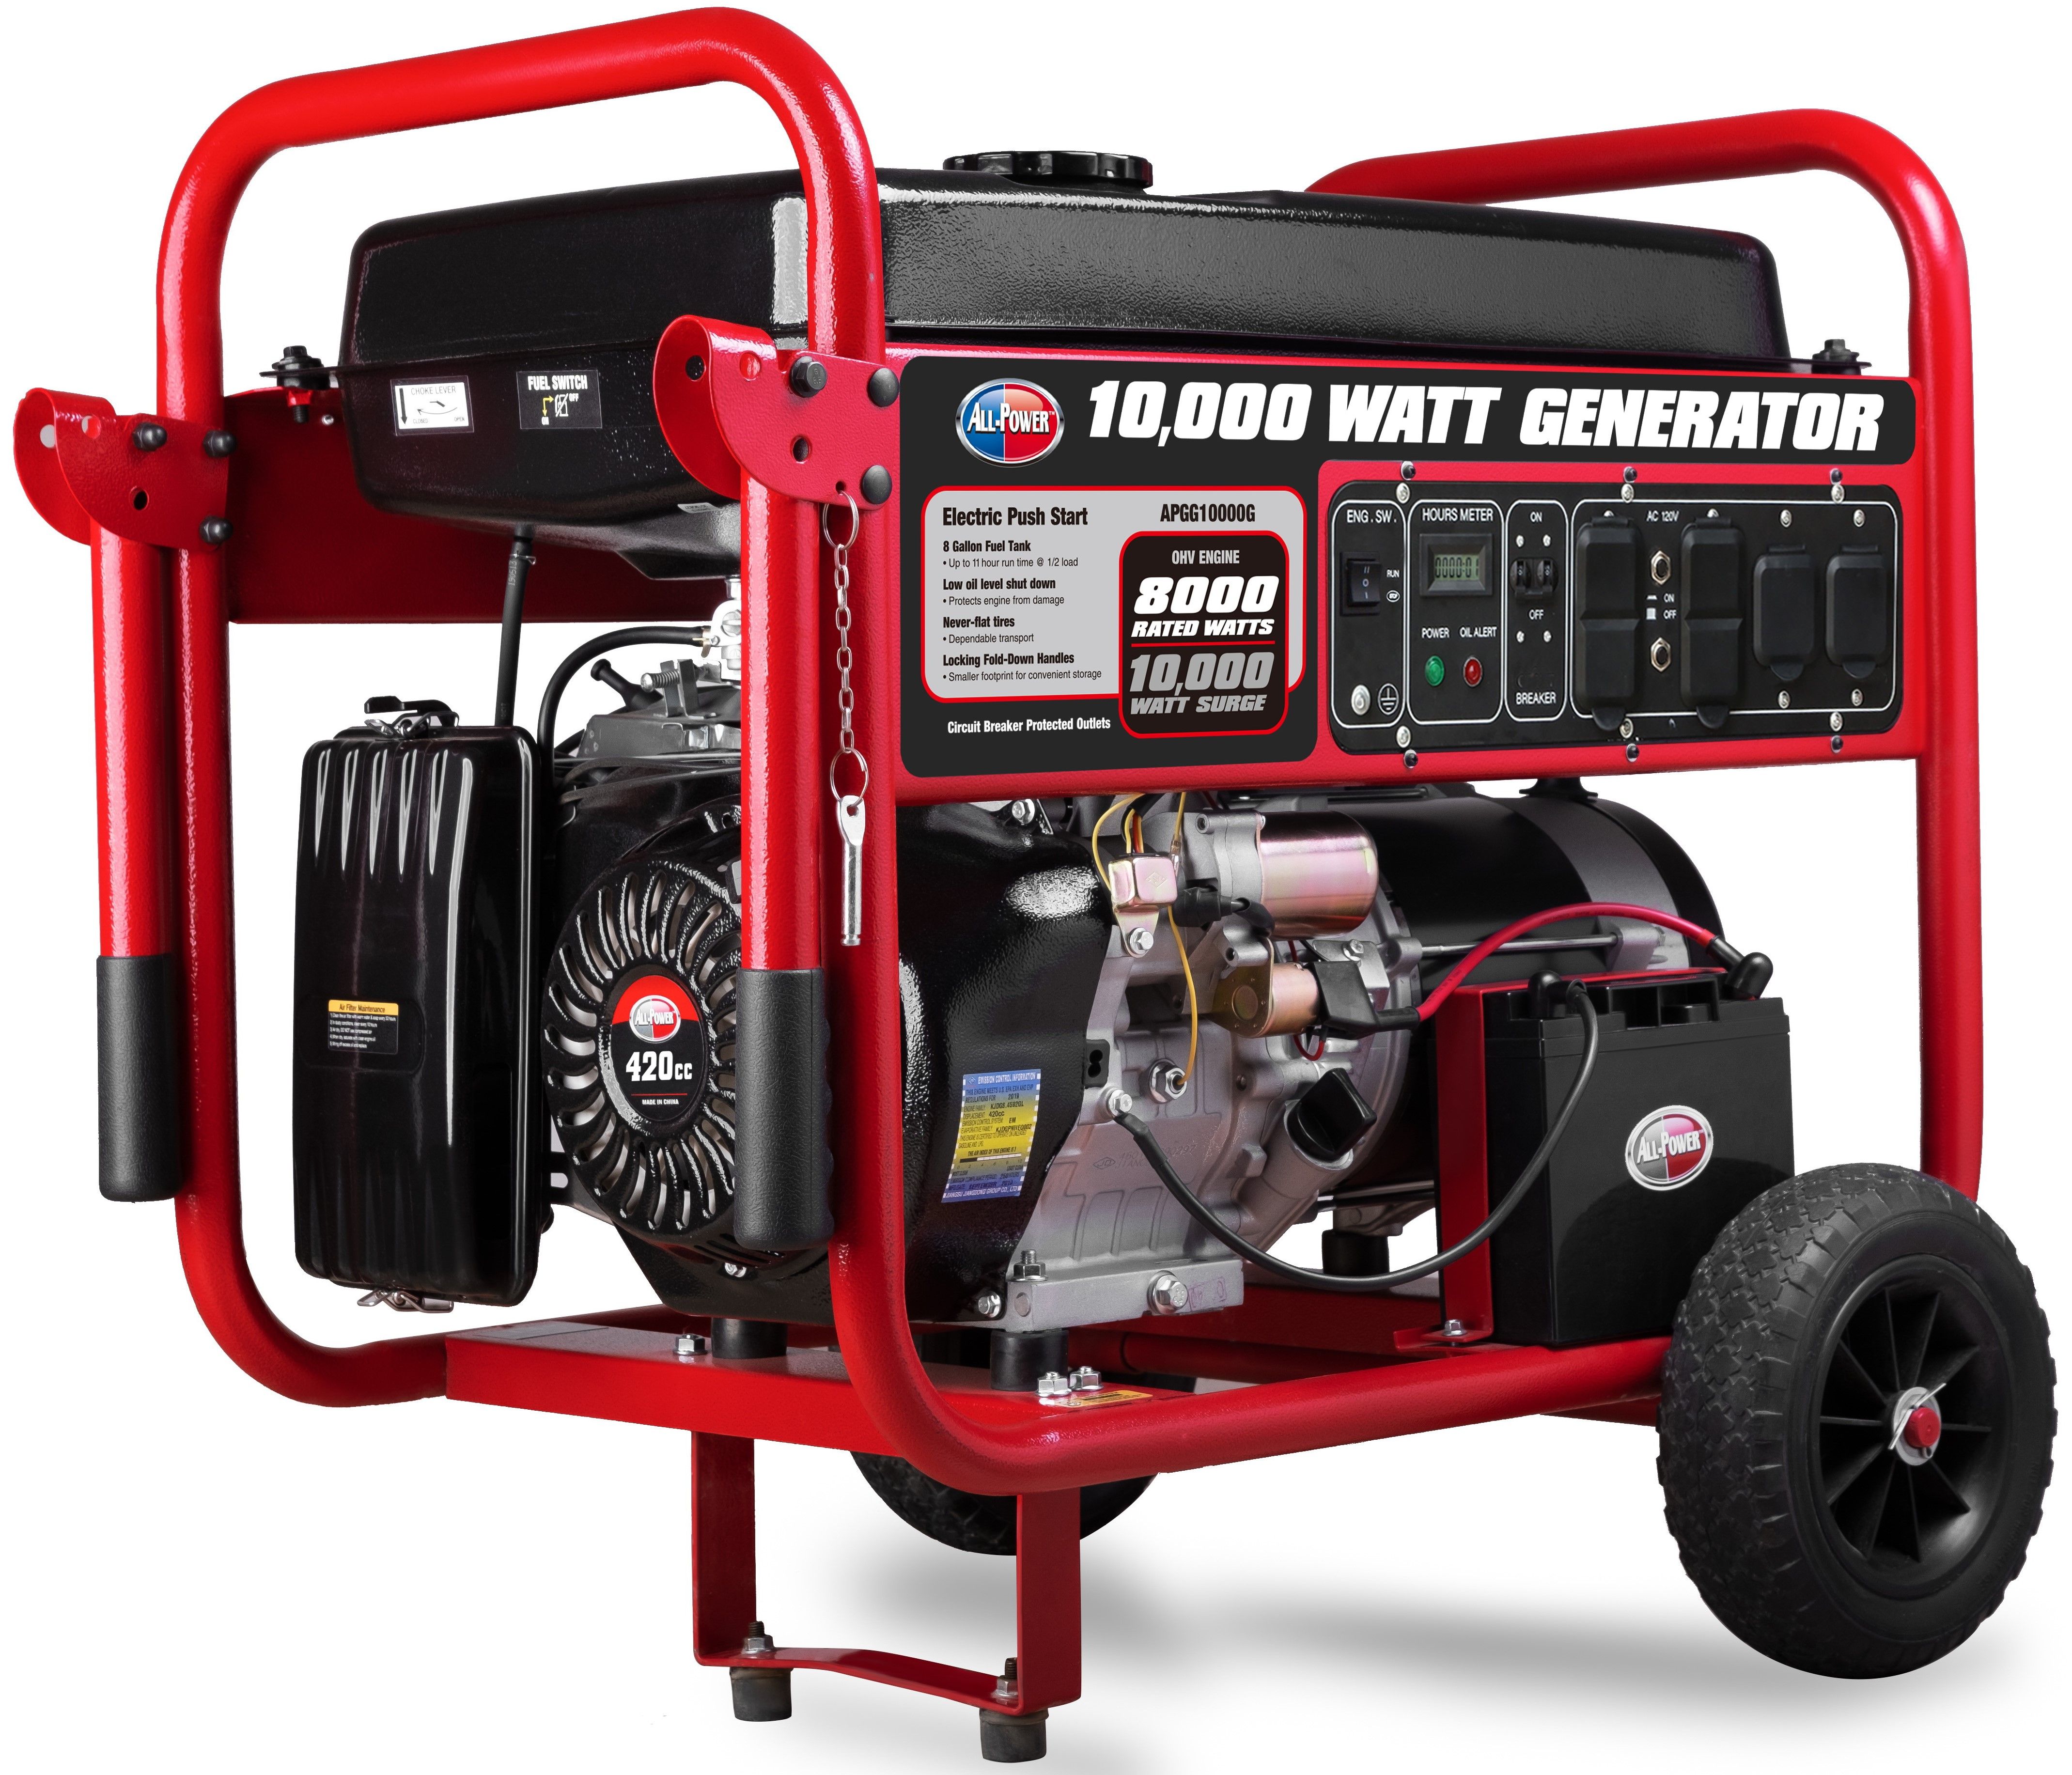 Apgg10000c 10000 Watt Gasoline Powered Electric Start Portable Generator With Wheel Kit, Black & Red